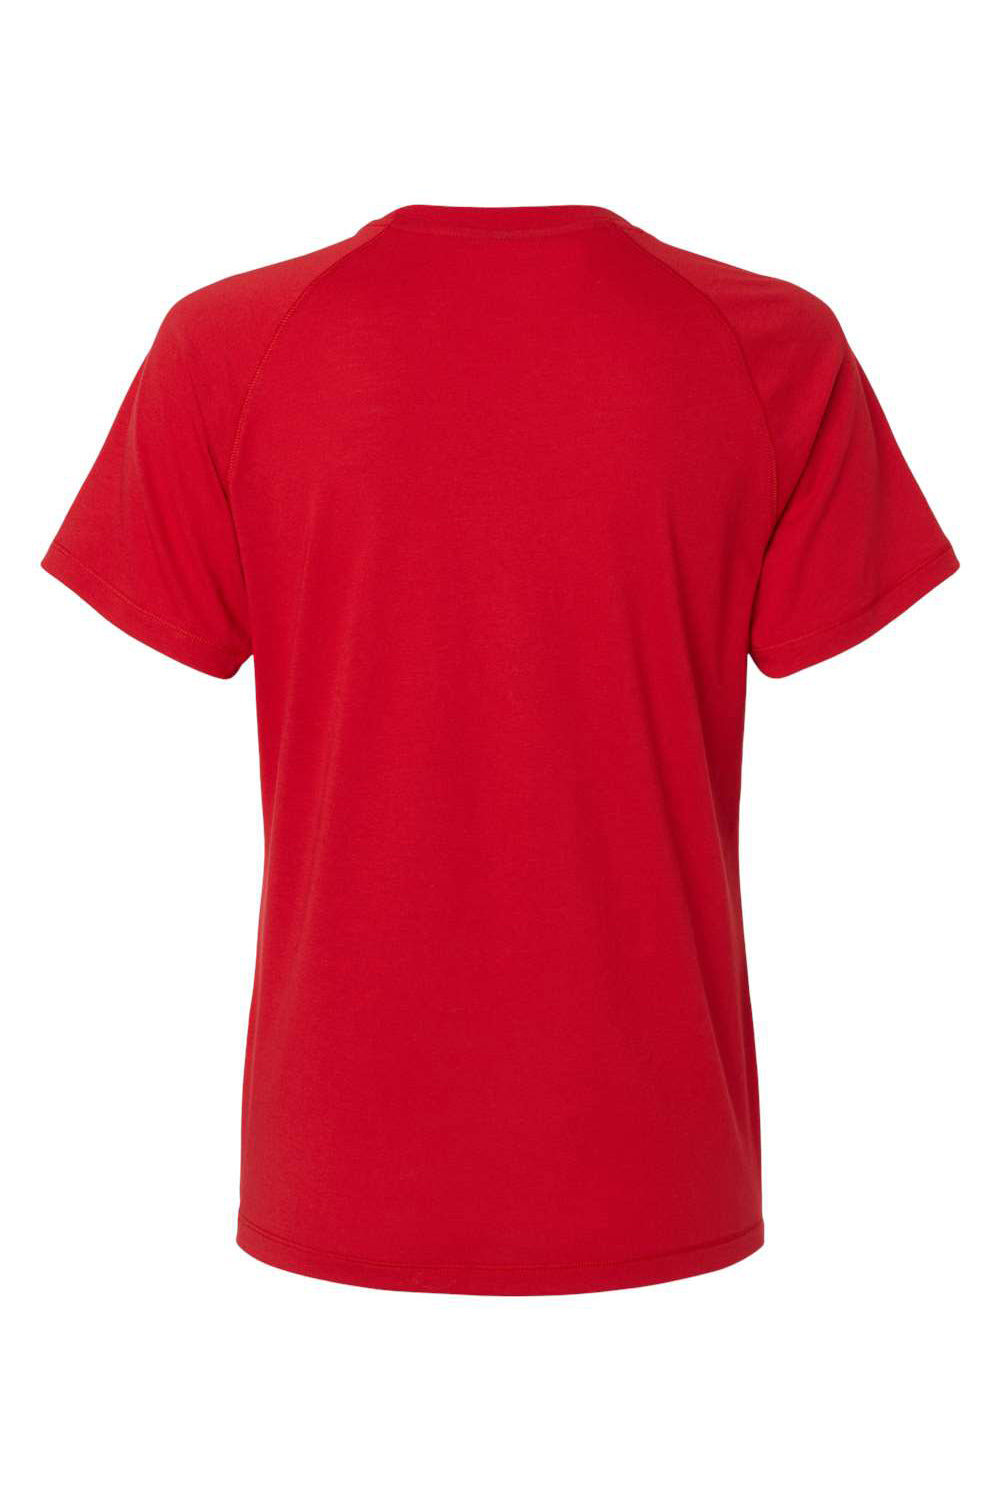 Adidas A557 Womens Short Sleeve Crewneck T-Shirt Power Red Flat Back